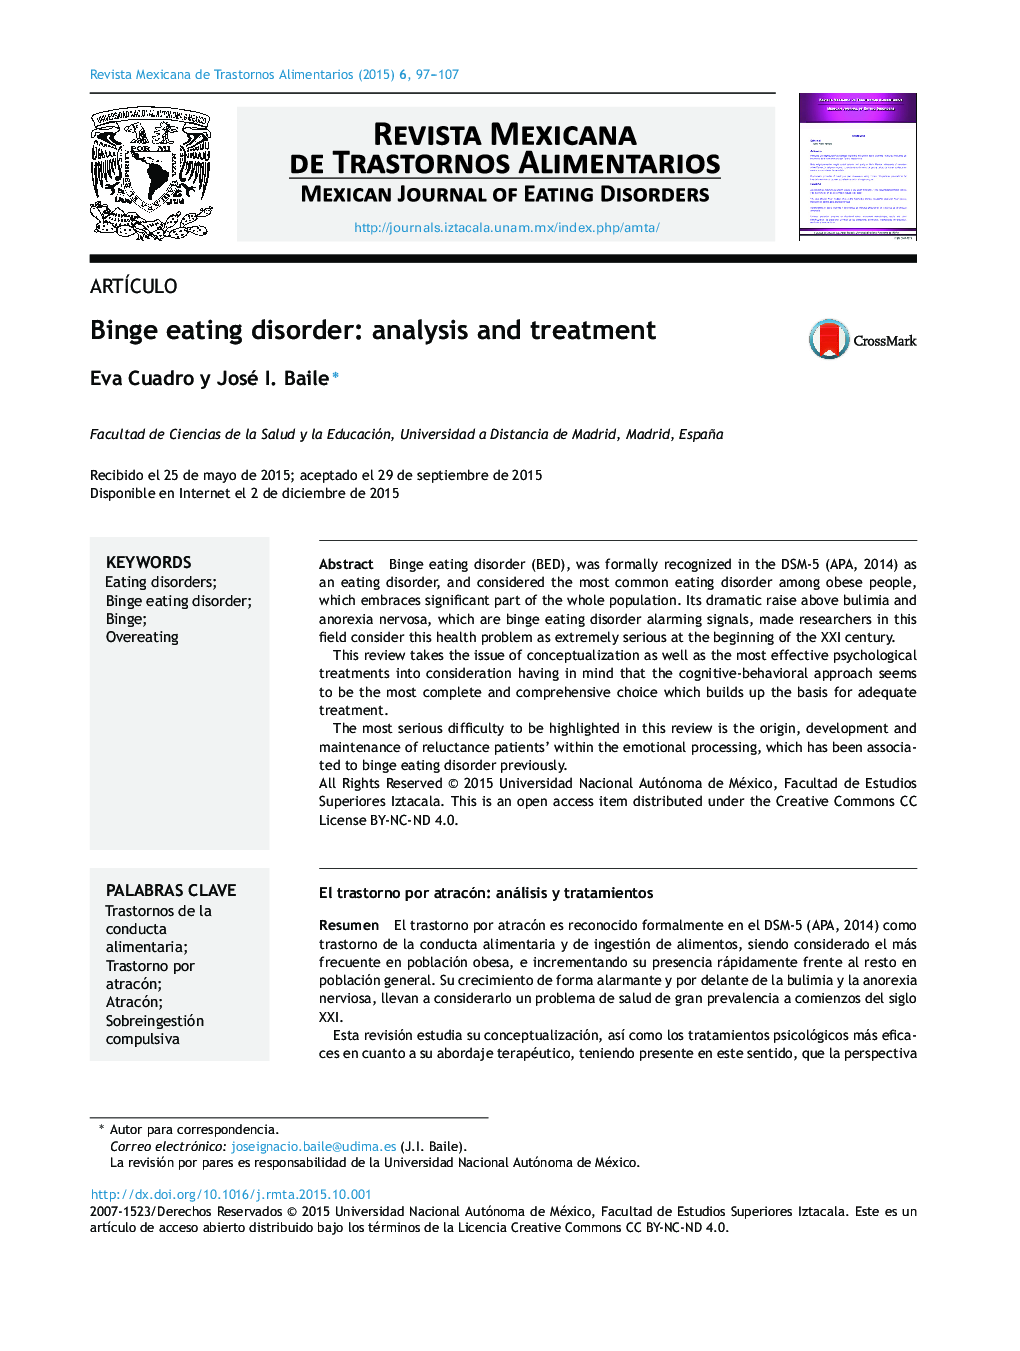 Binge eating disorder: analysis and treatment 